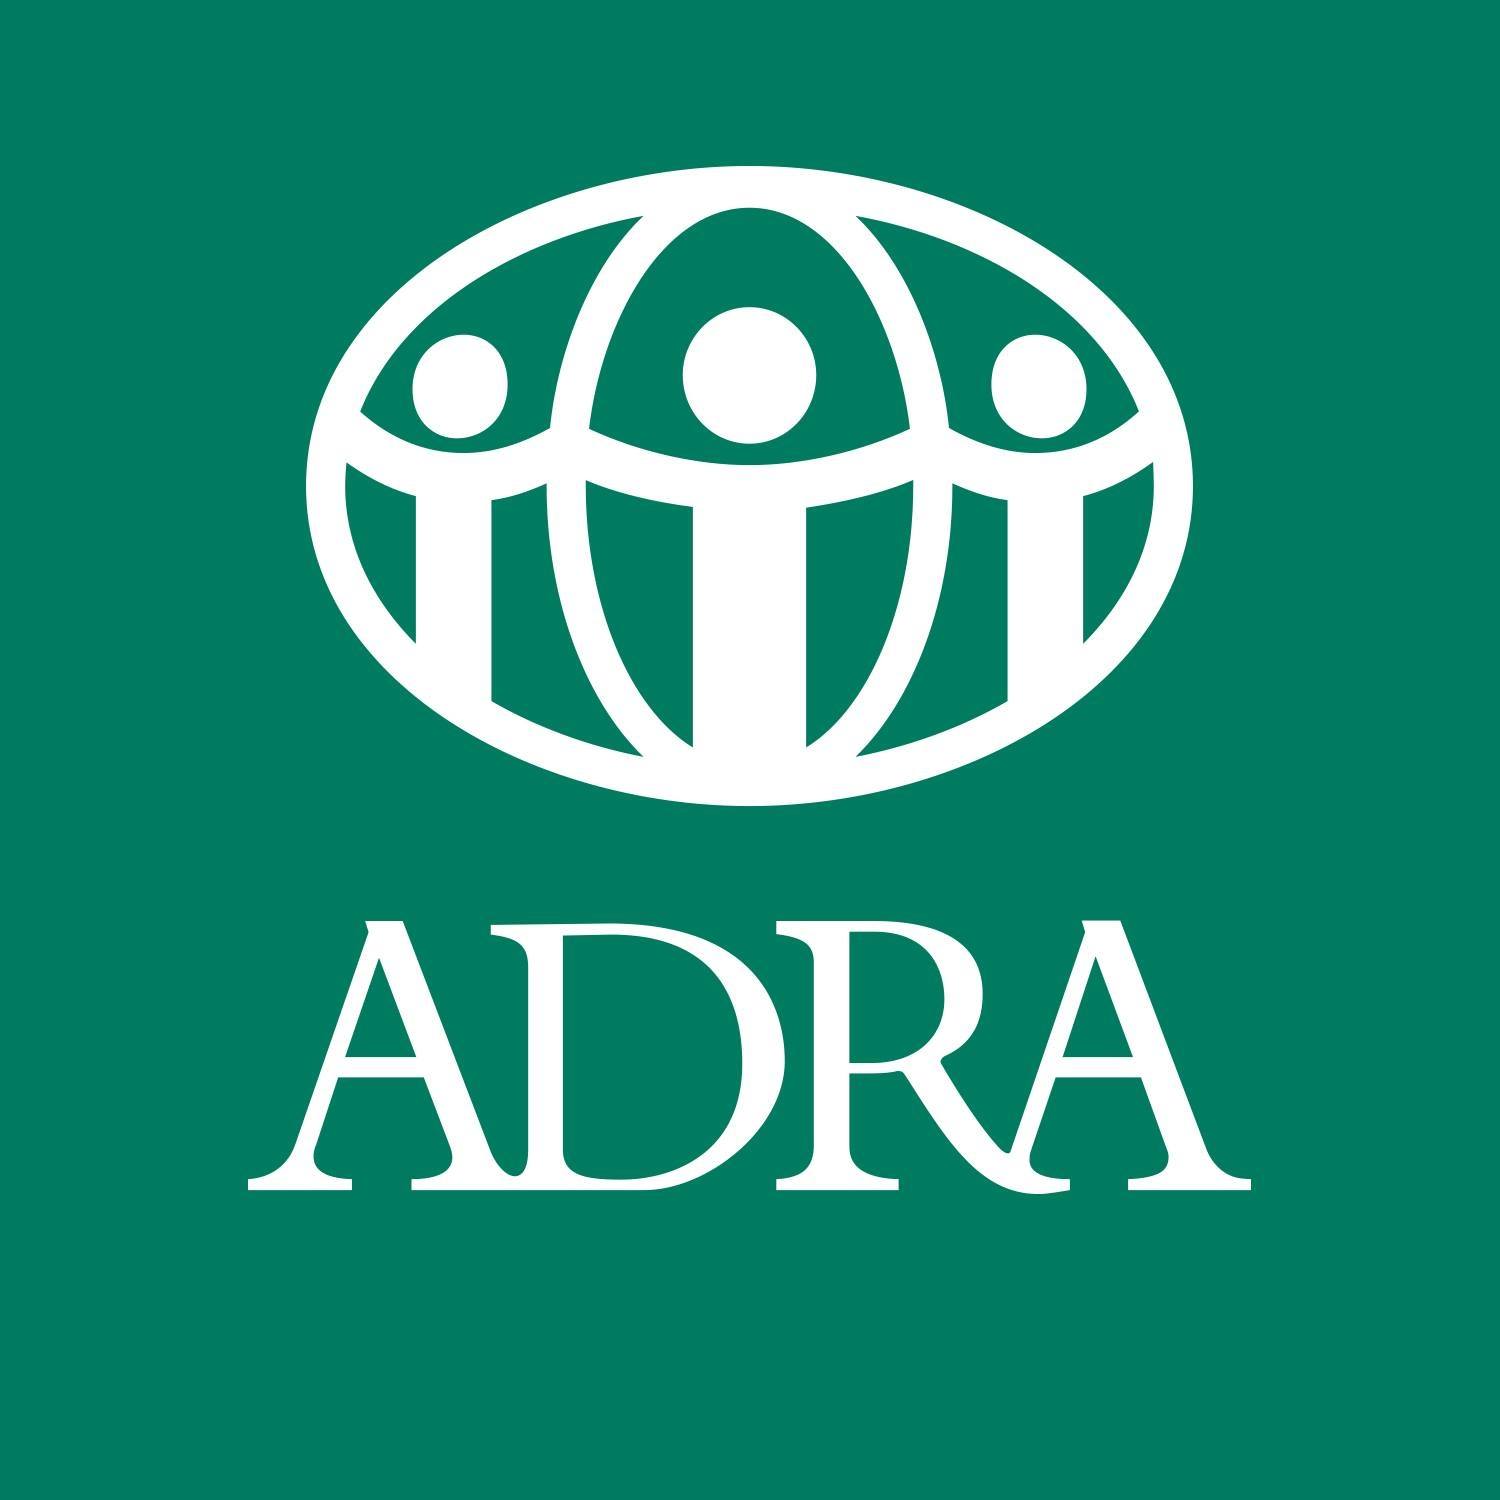 Company logo of ADRA Op Shop